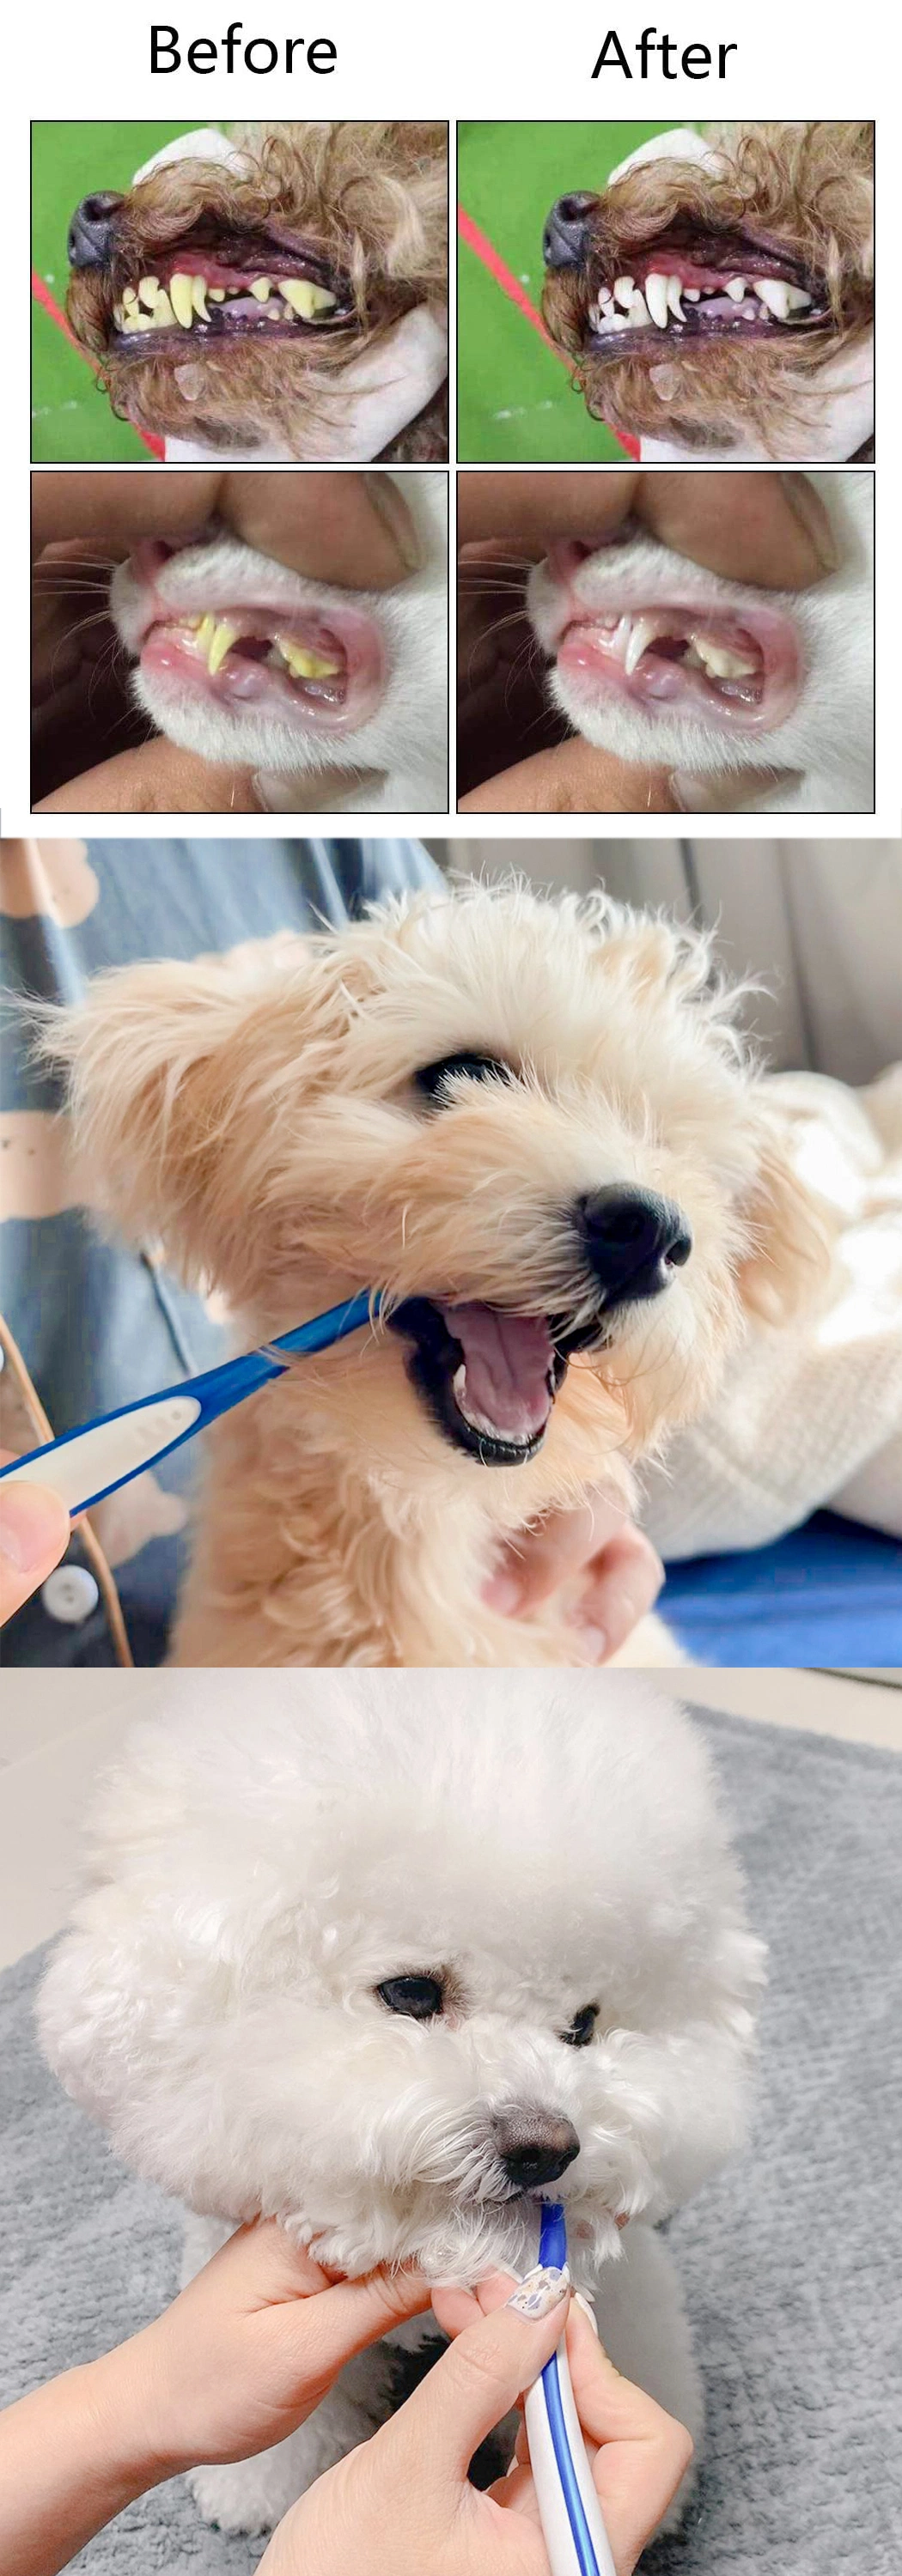 OEM Extra Soft Bristle Small Head Dog Cat Pet Toothbrush